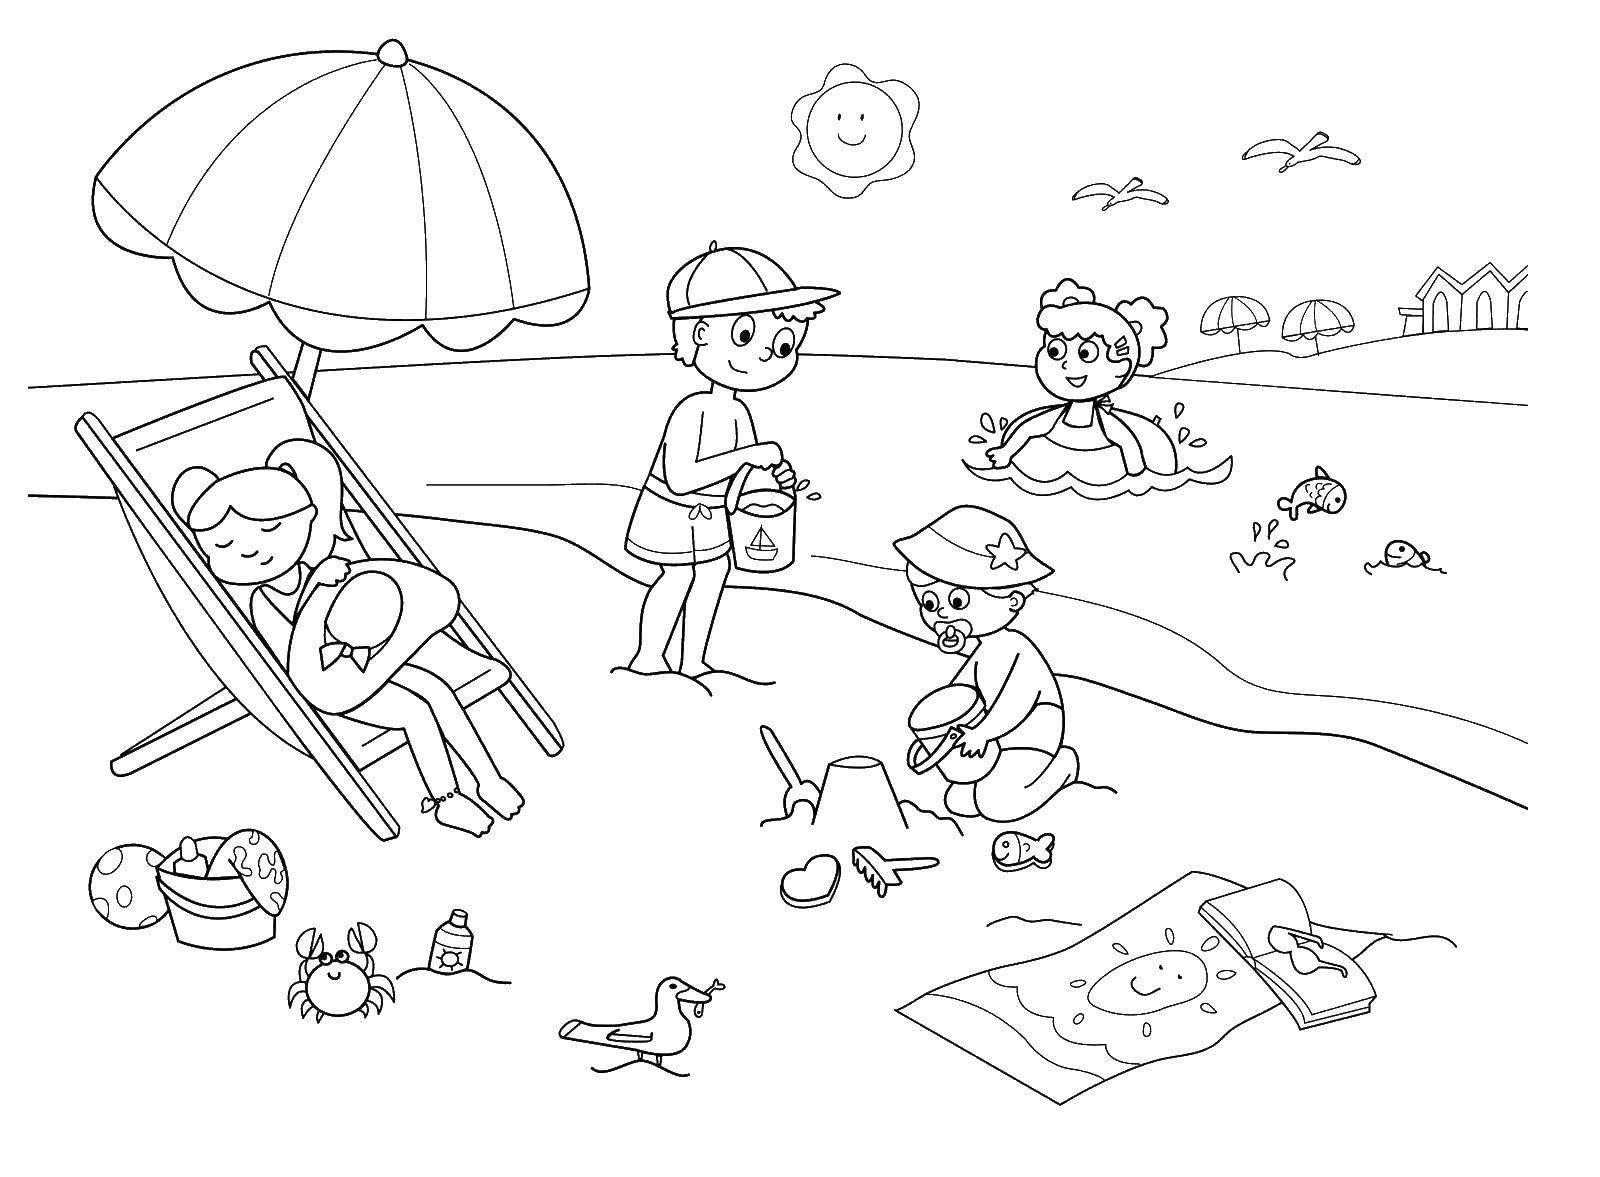 Название: Раскраска Дети на пляже. Категория: лето. Теги: лето, пляж, дети.